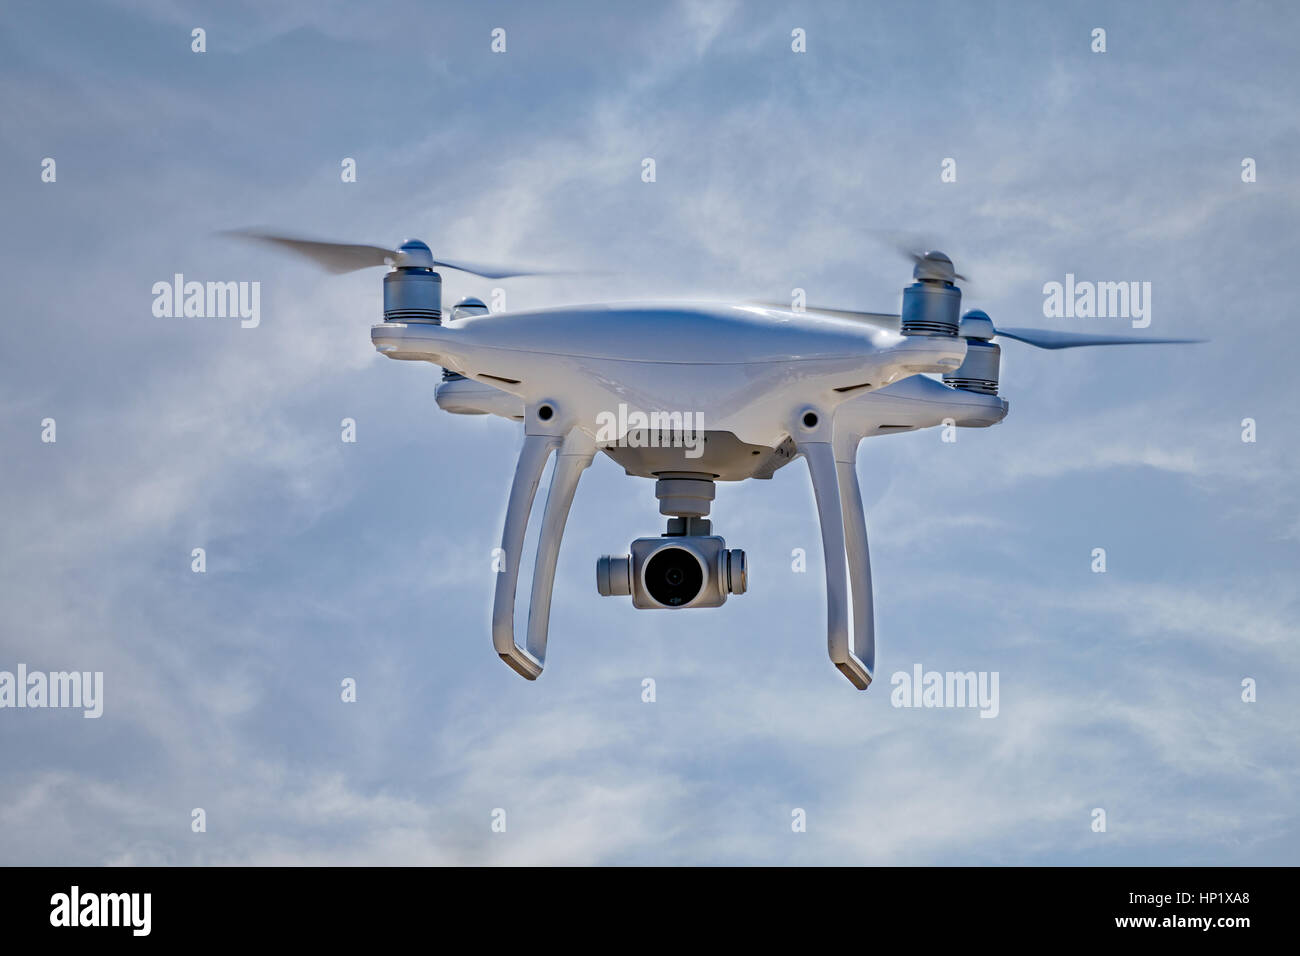 DJI Drone Phantom ispirare al di sopra del cielo Foto Stock